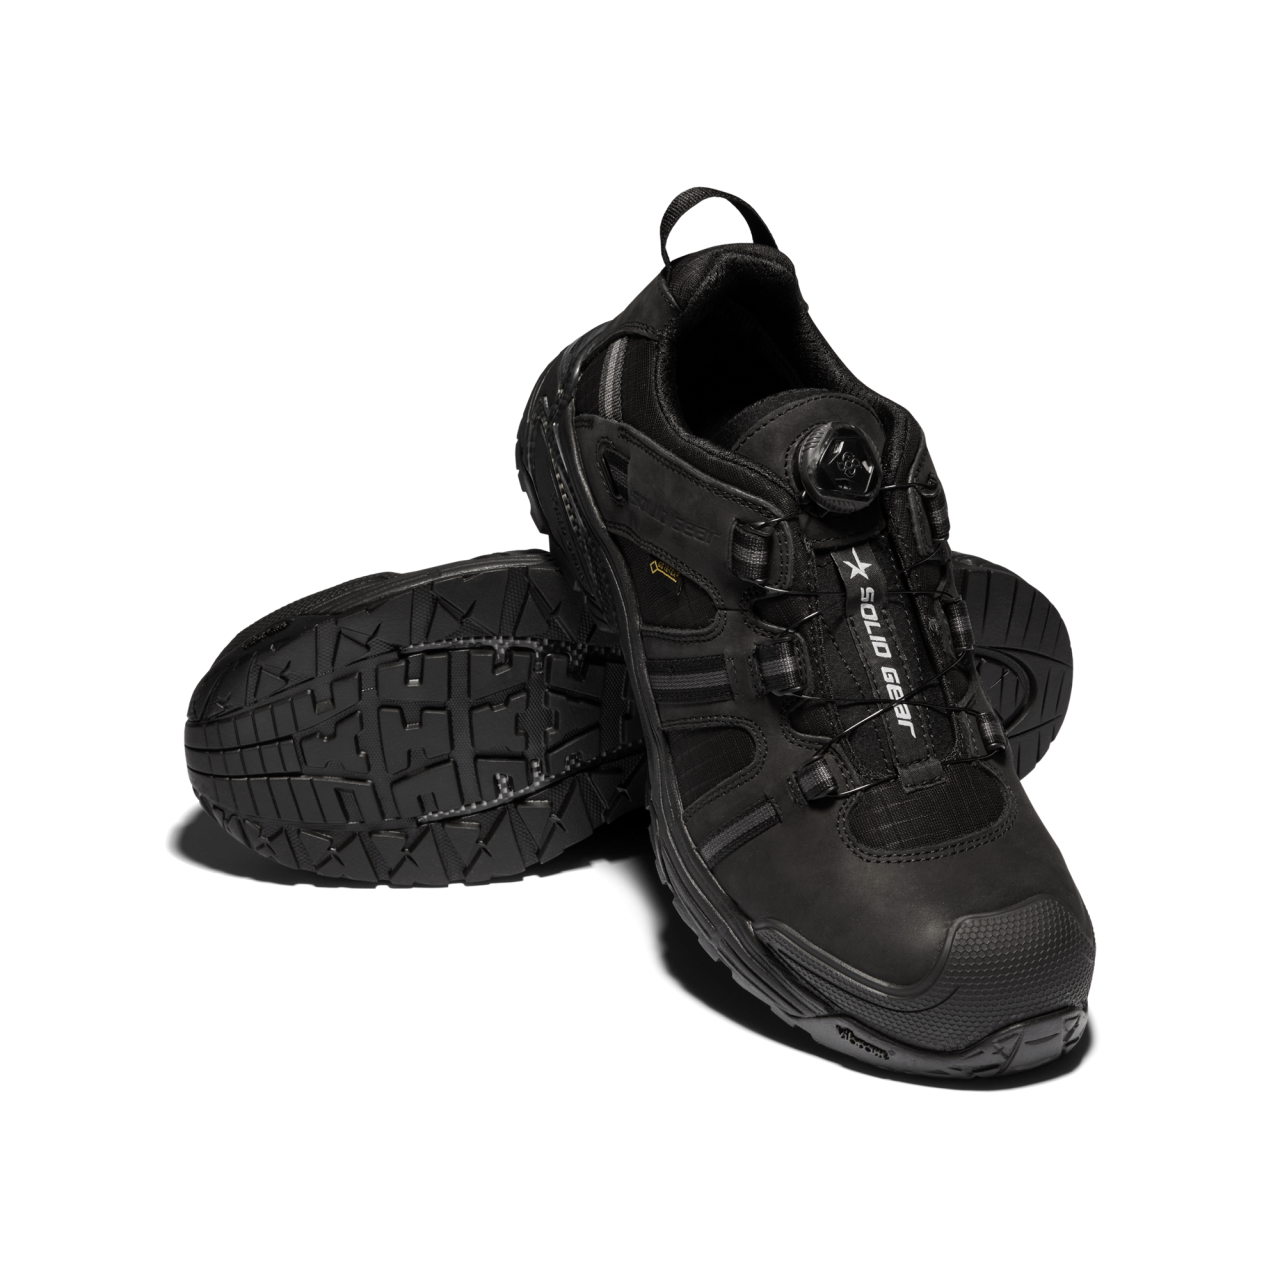 Zapato de seguridad S3 Enforcer GTX talla 47